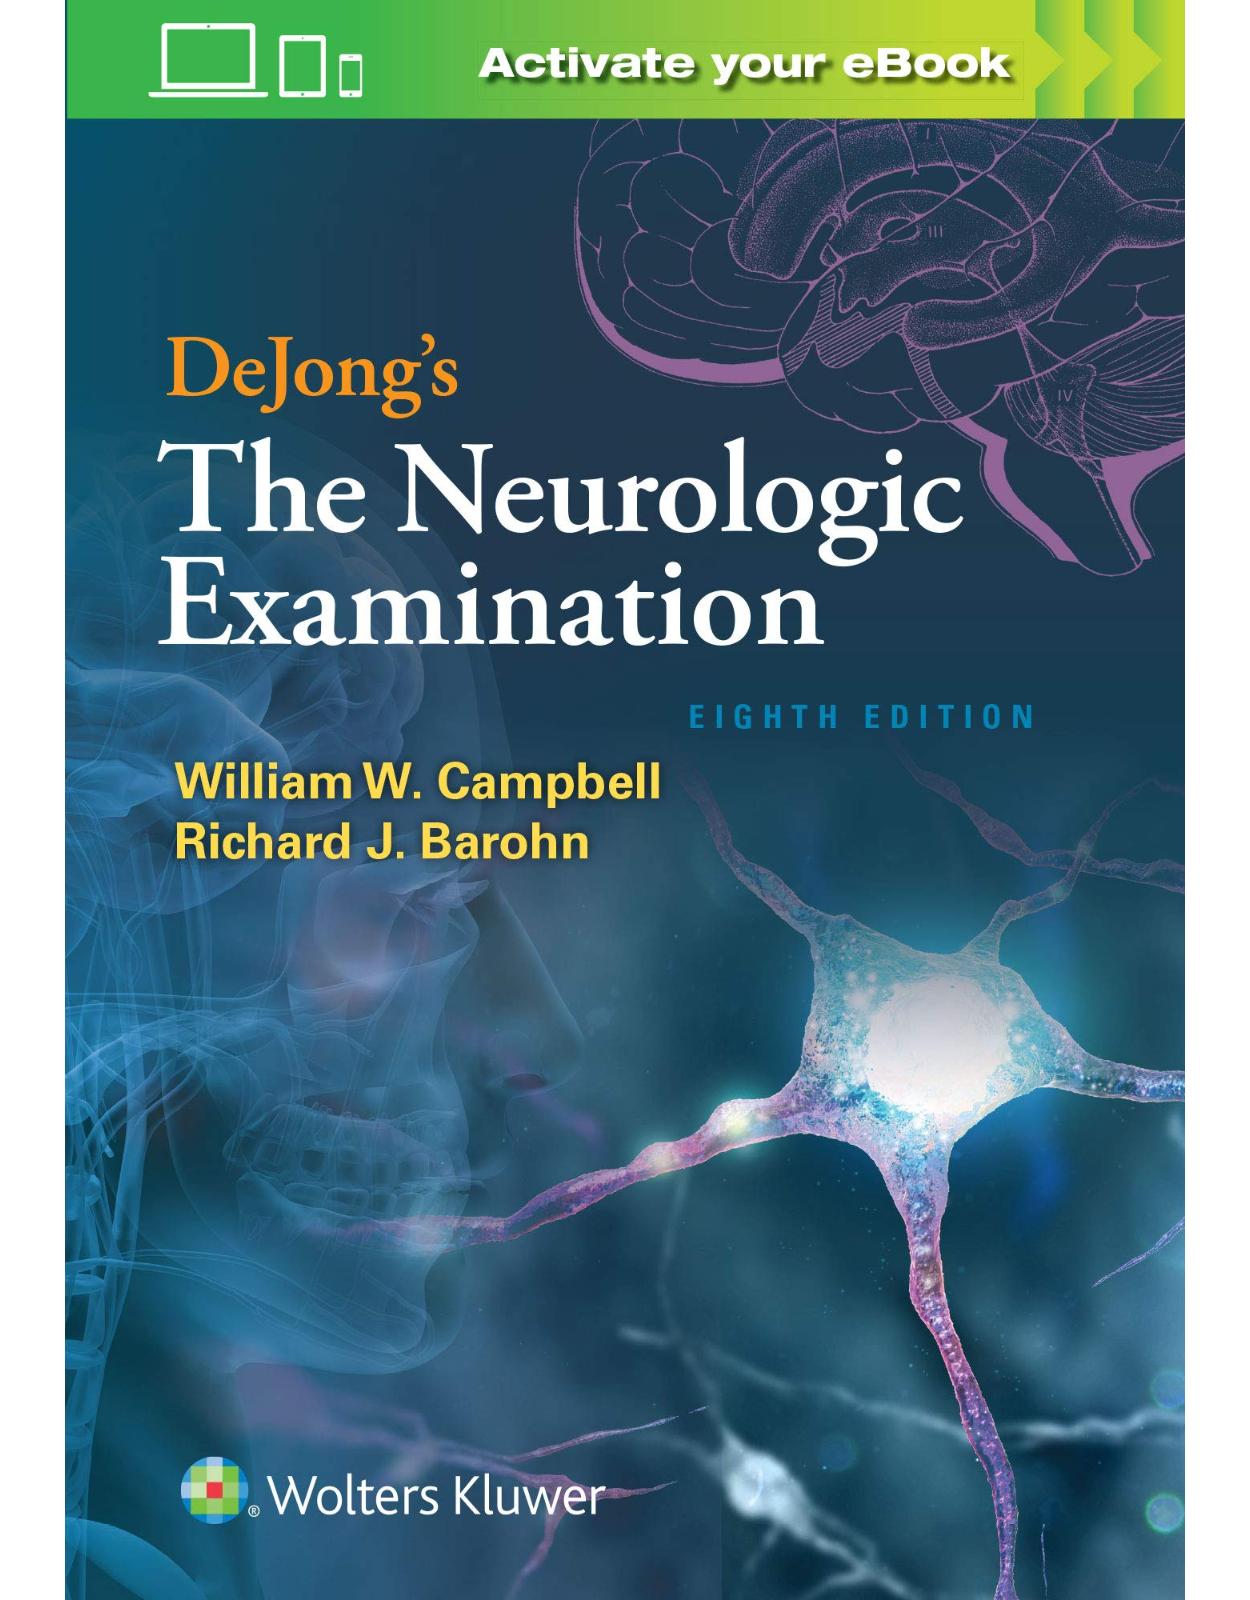 DeJongs The Neurologic Examination. Eighth edition